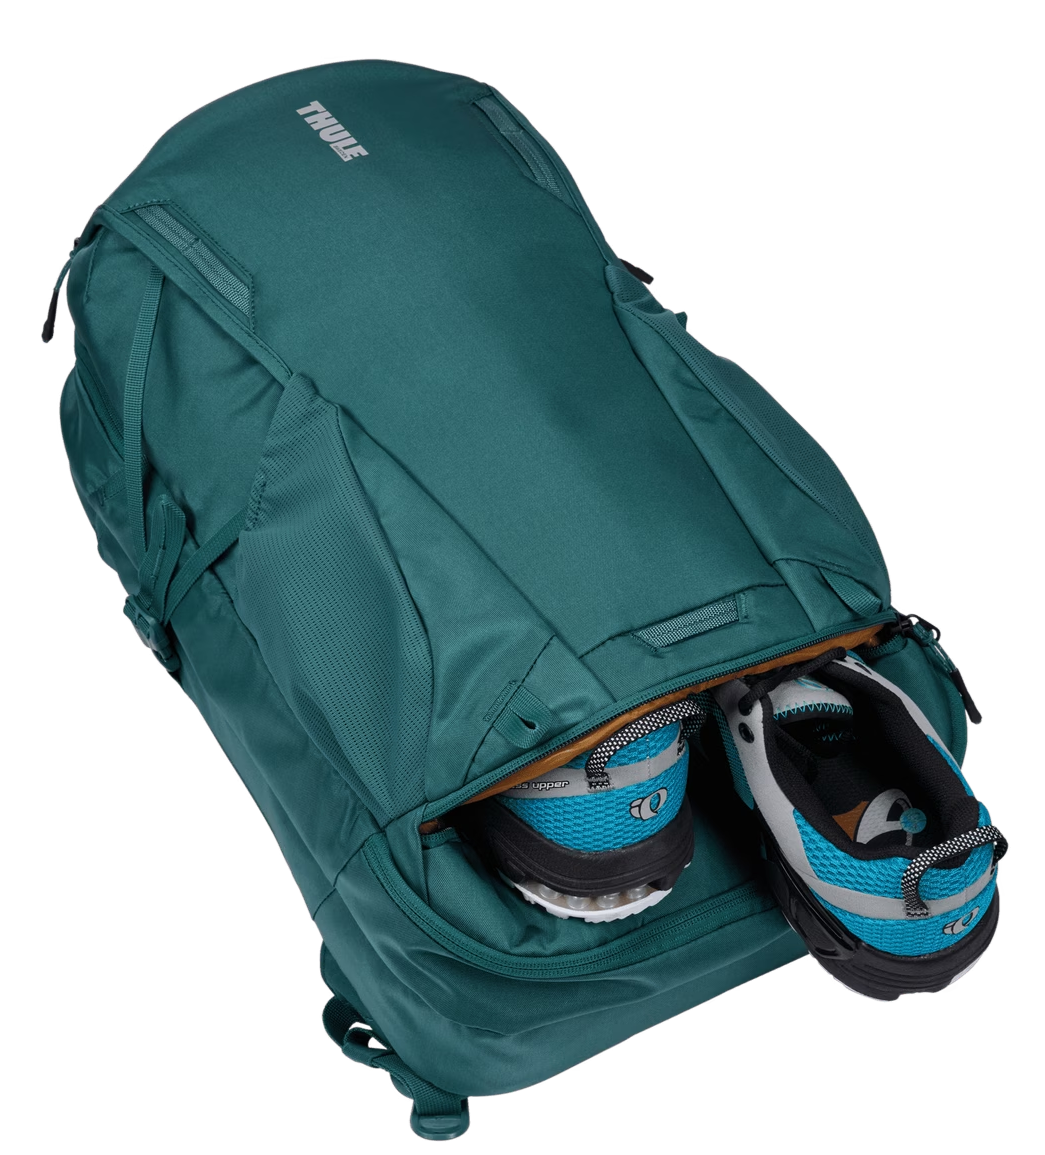 Thule EnRoute Backpack - 30L -Mallard Green Rugzak - Reisartikelen-nl